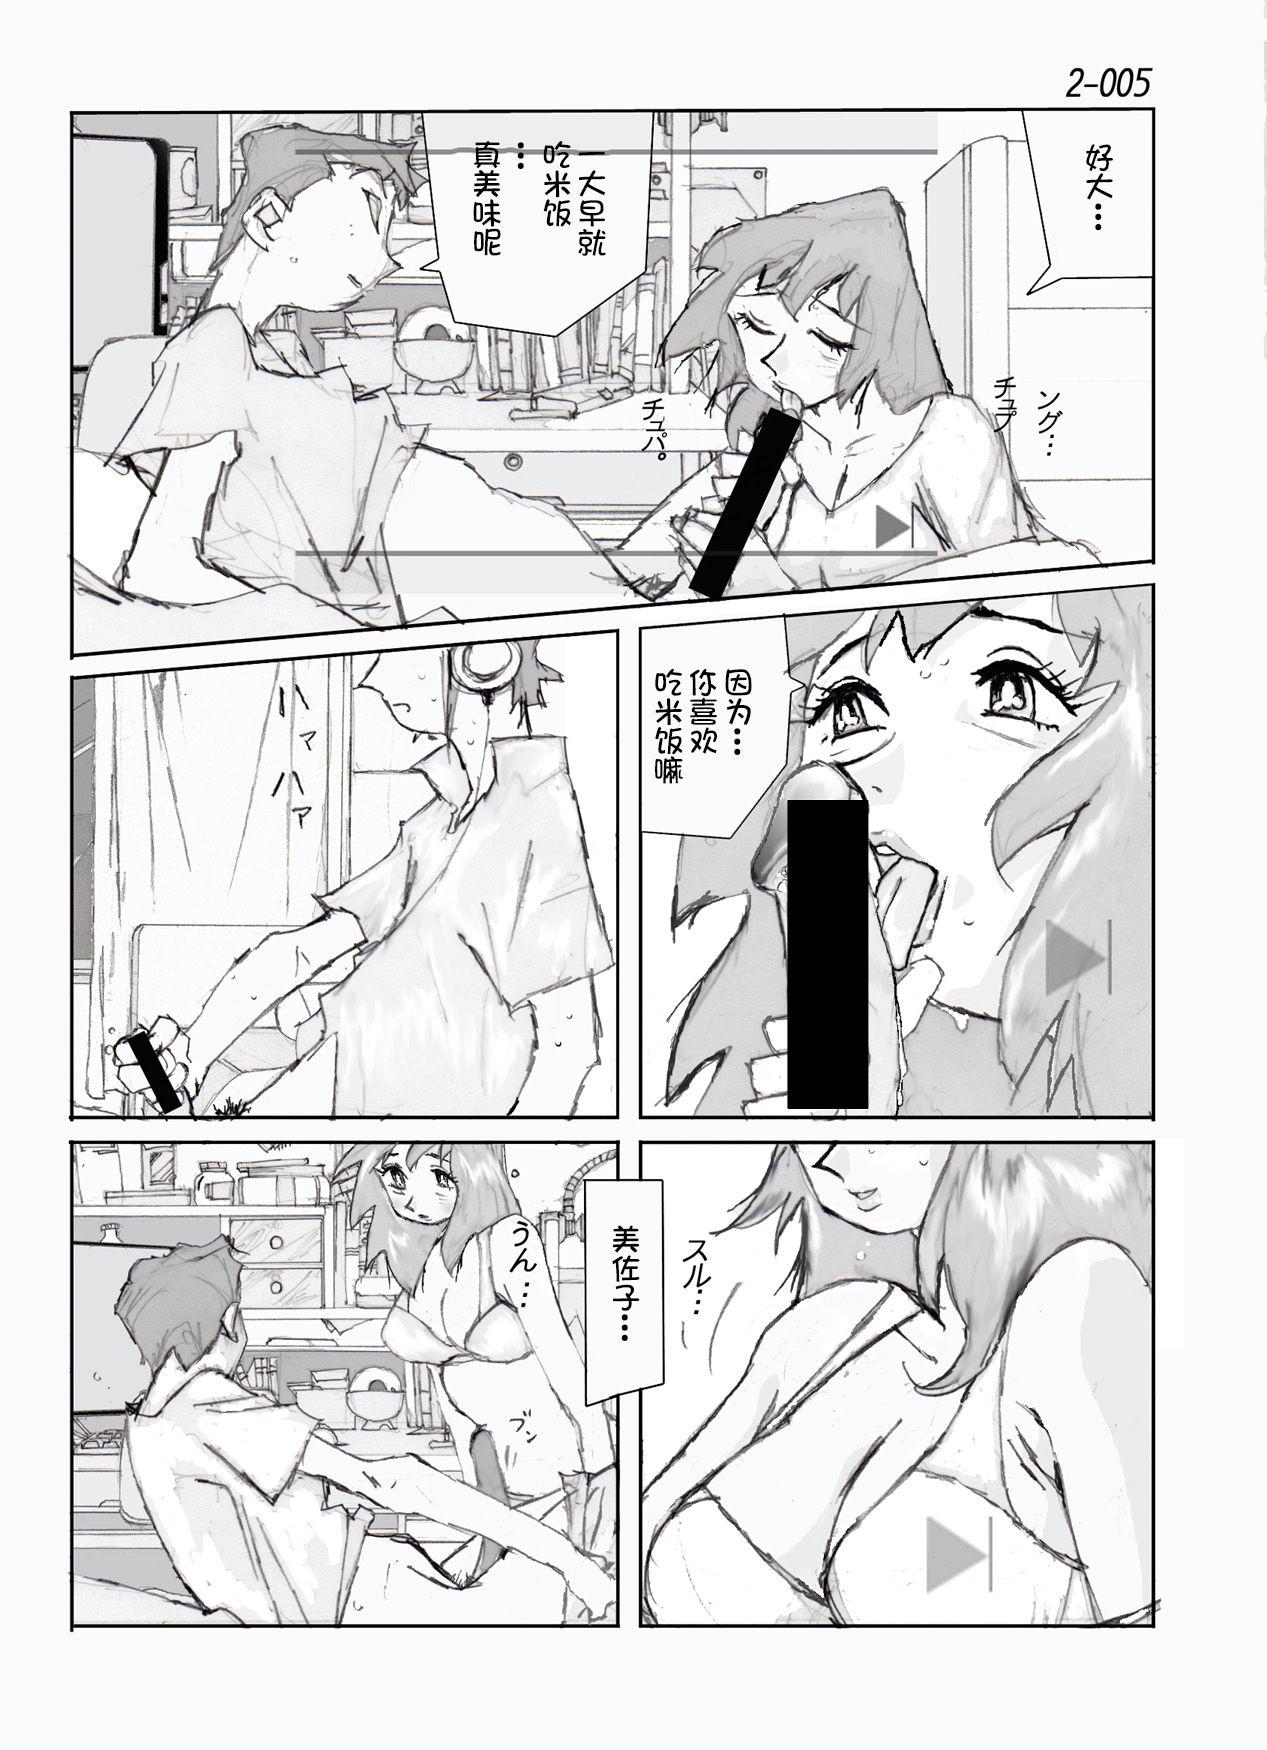 Novinhas Kamo no Aji - Misako 2 - Original Young Old - Page 6